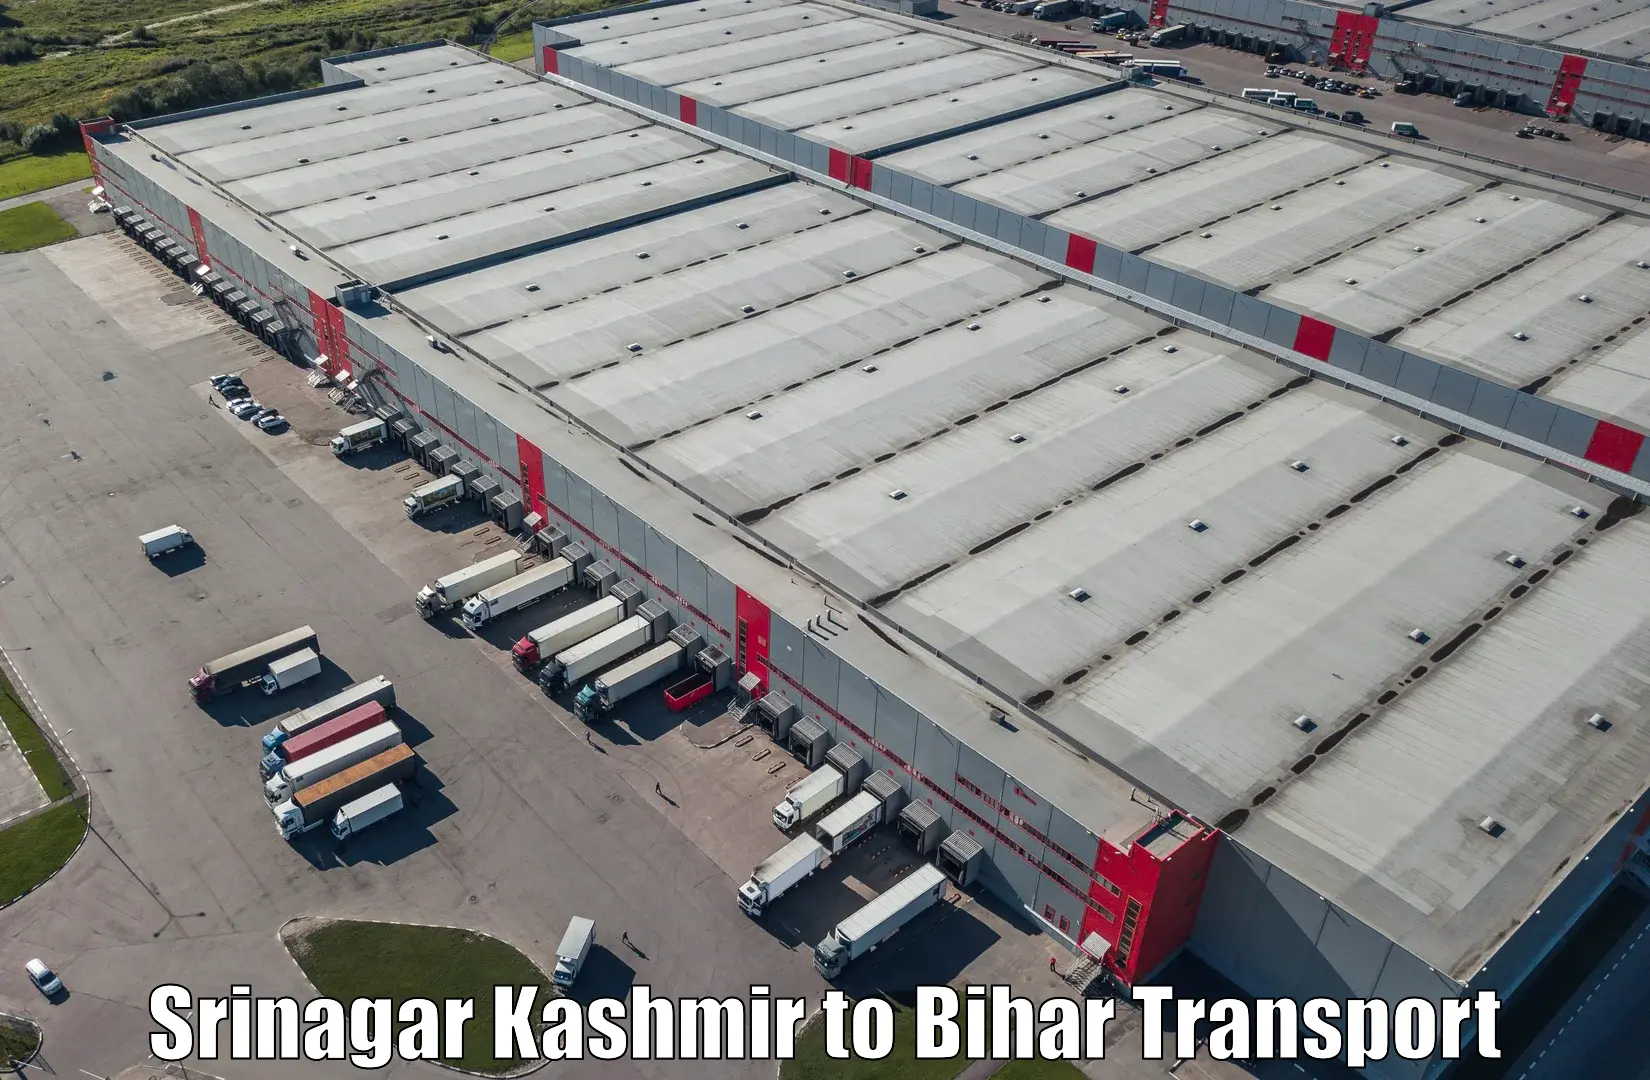 Pick up transport service in Srinagar Kashmir to Bhagalpur